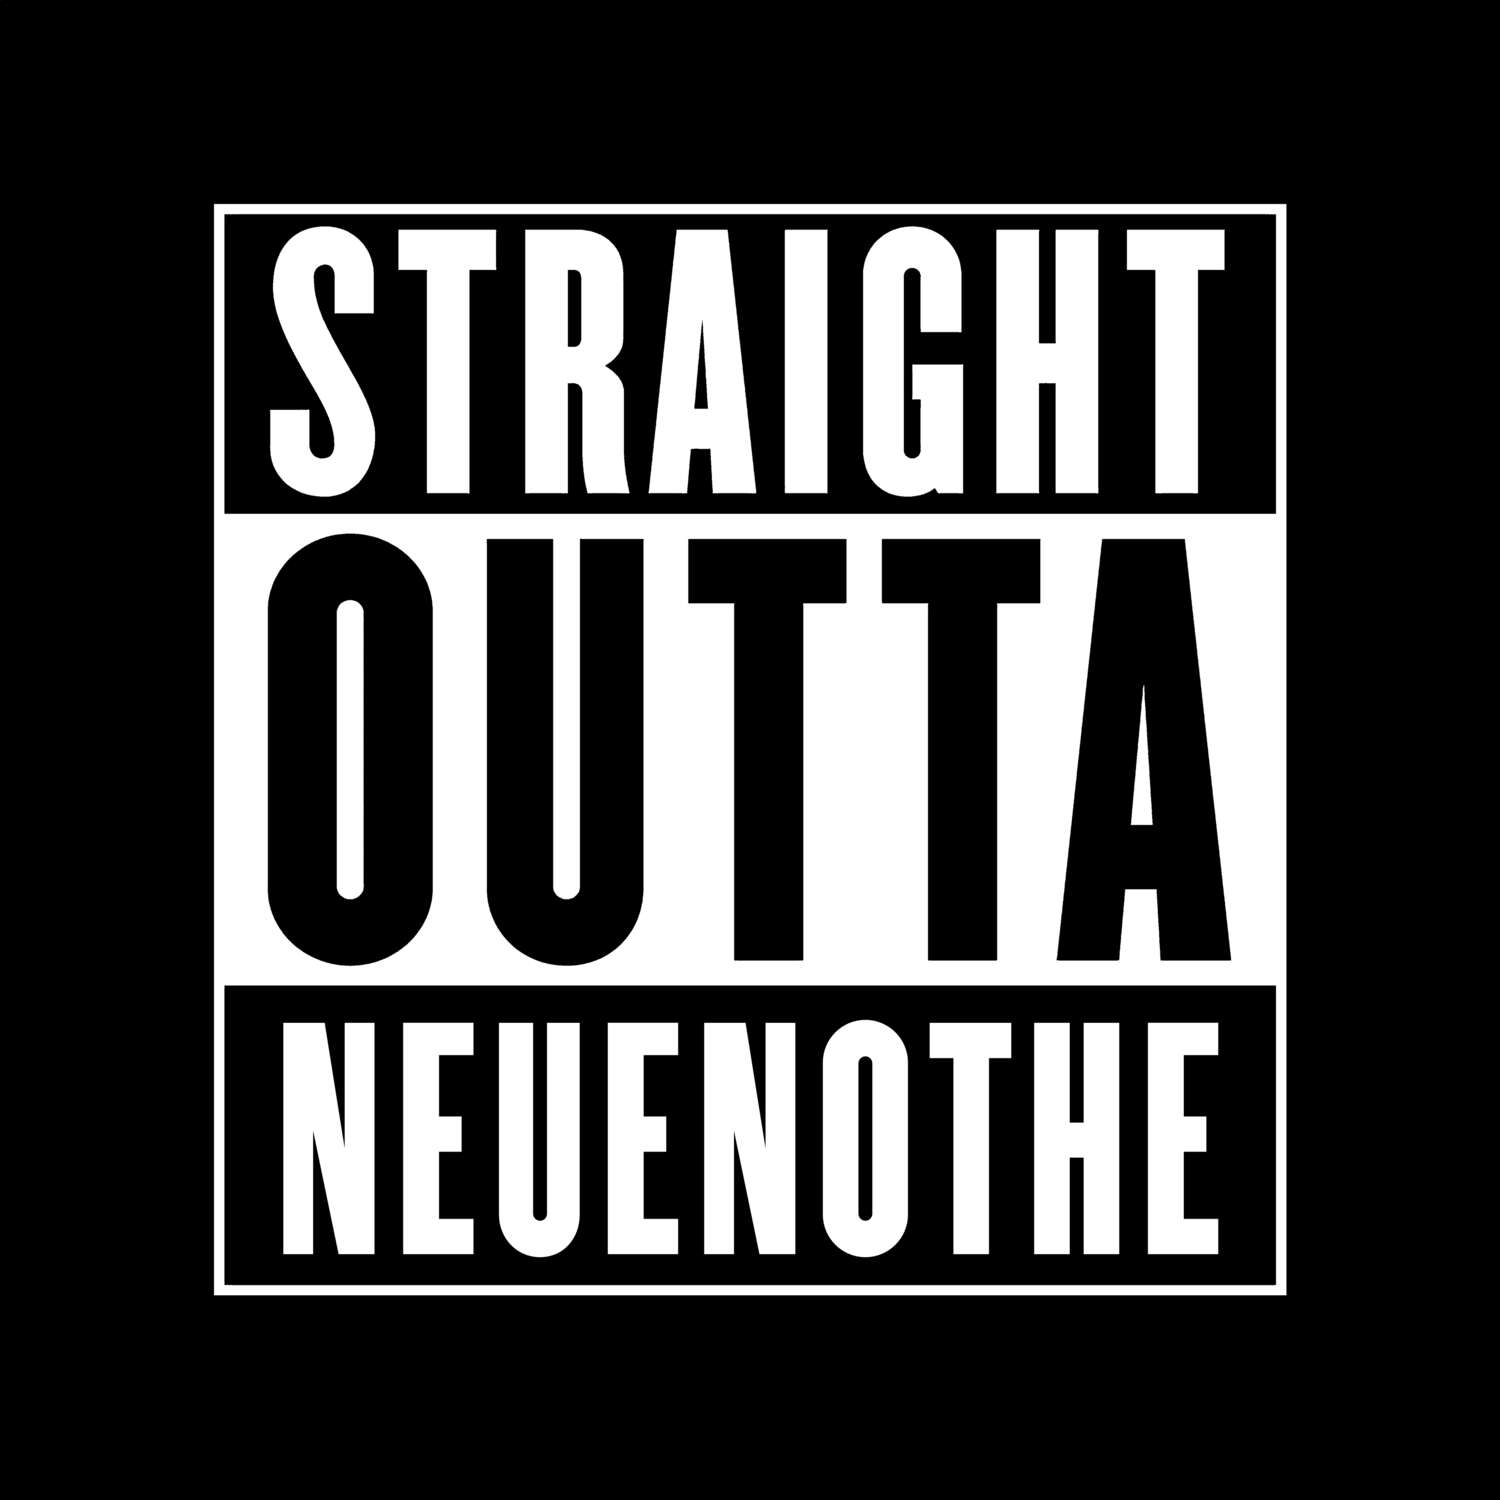 Neuenothe T-Shirt »Straight Outta«